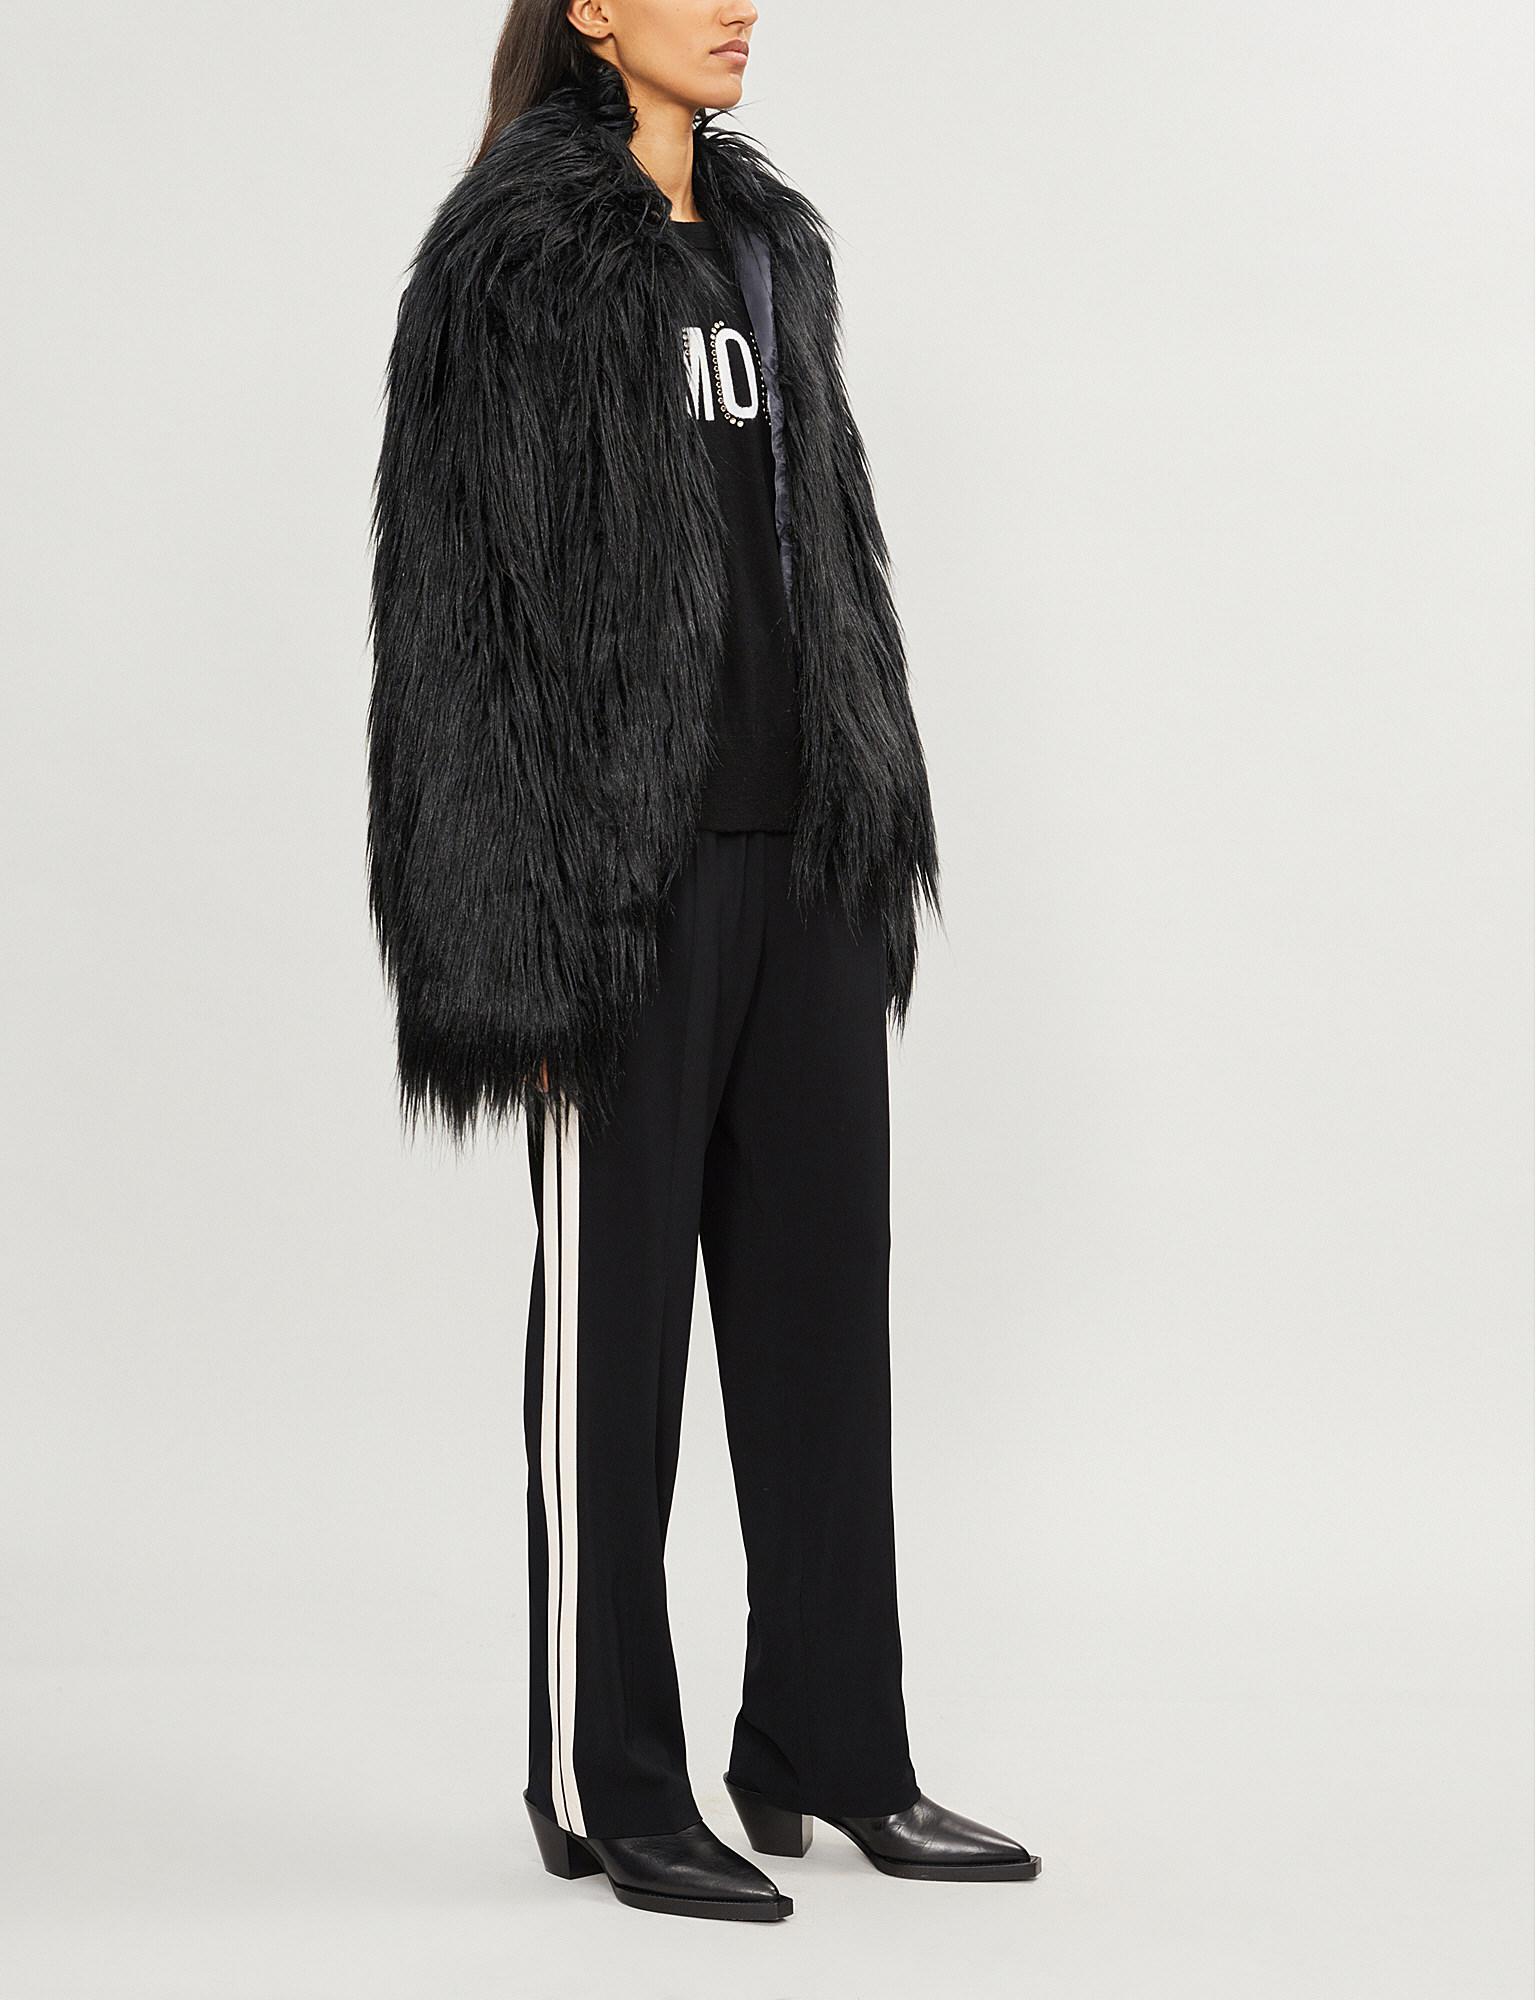 Zadig & Voltaire Fridas Open-front Faux-fur Coat in Black | Lyst